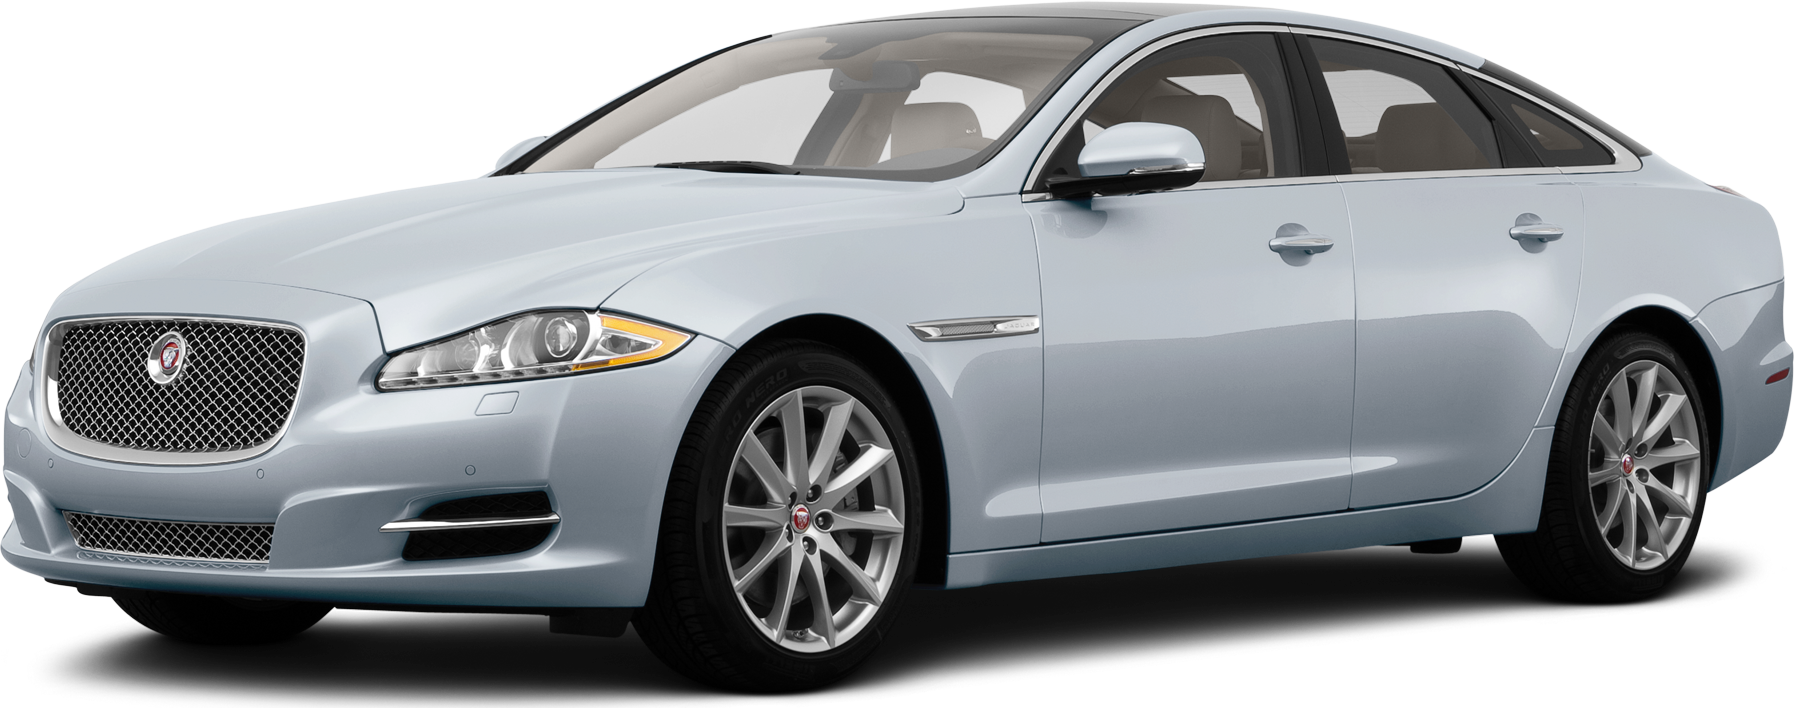 Used 2015 Jaguar Xj Values Cars For Sale Kelley Blue Book